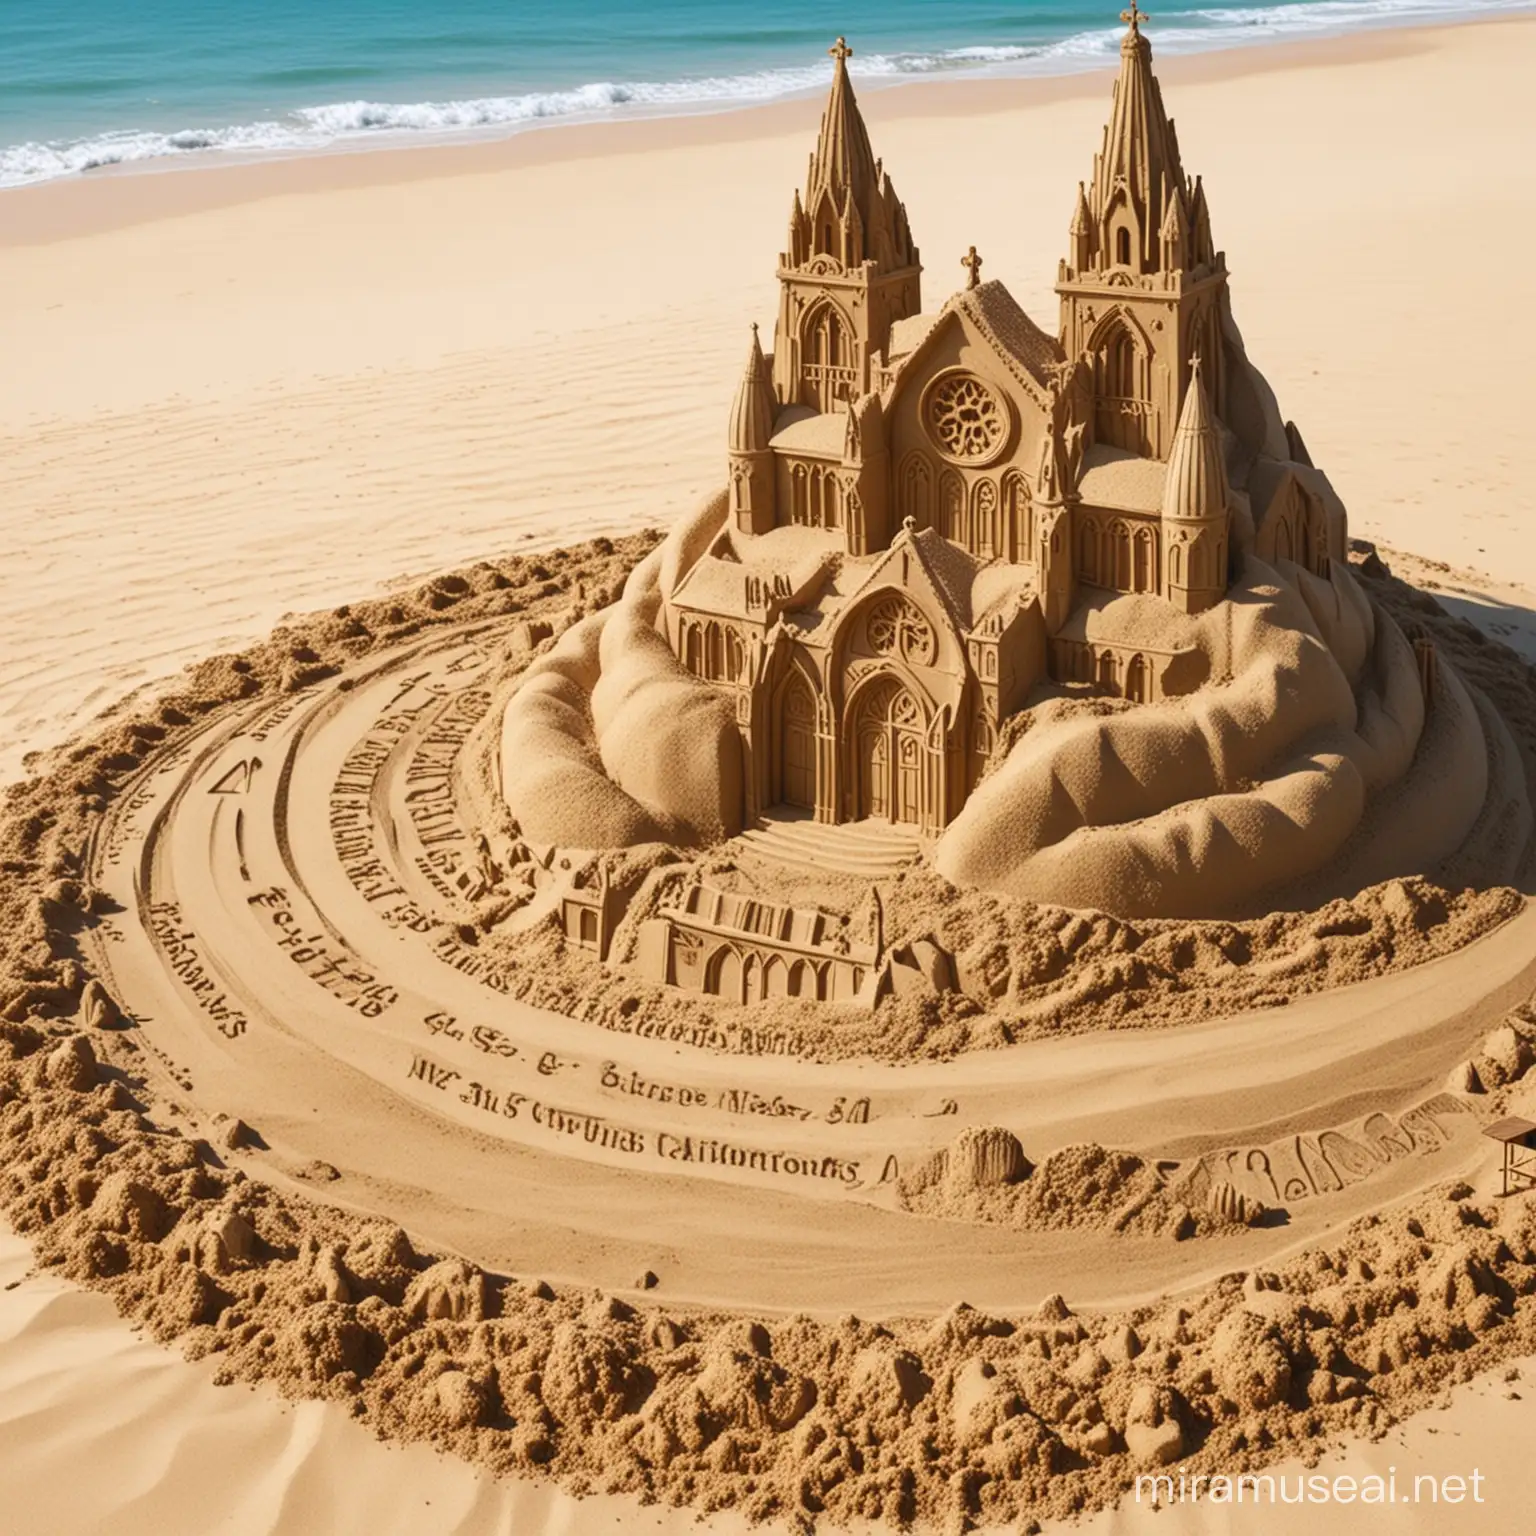 create a church 3D beach Sand sculpture,beach background,Ultra HD photography quality